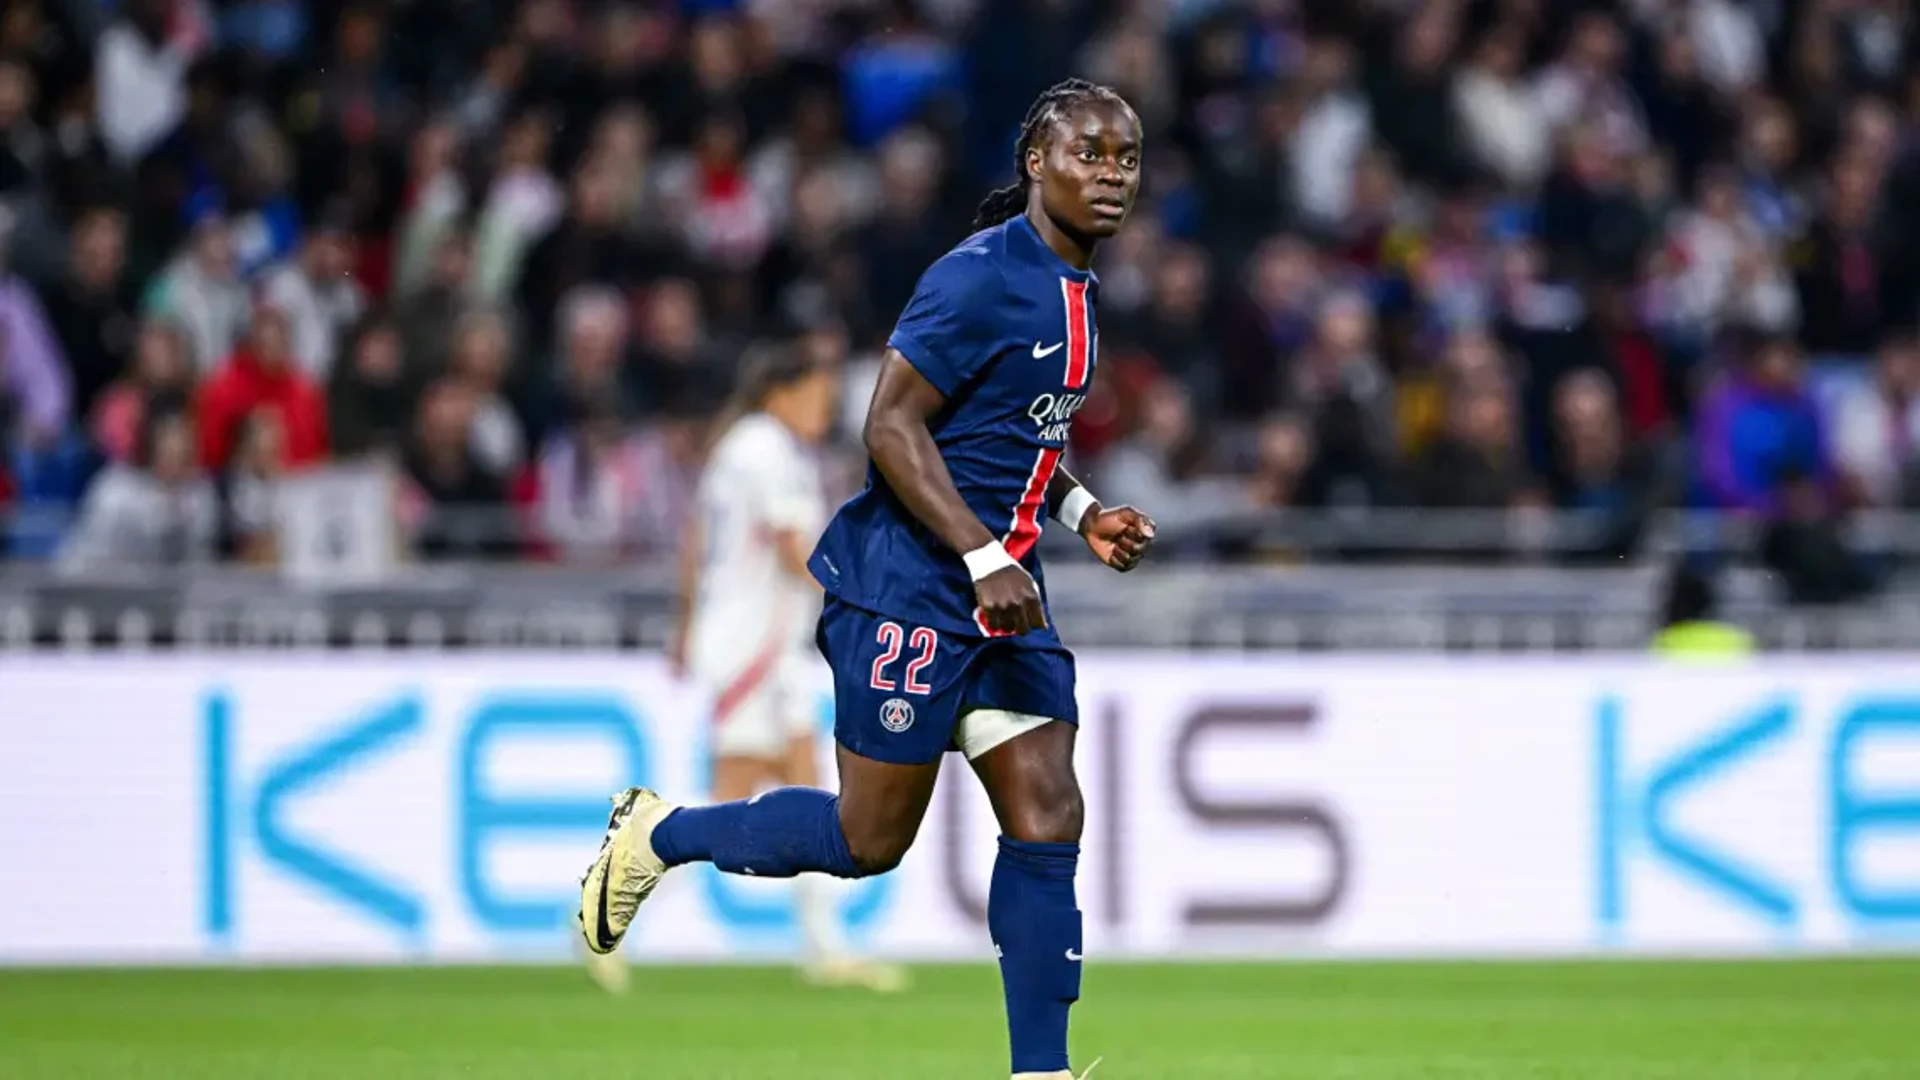 BIG MOVE: Malawian superstar Chawinga signs for French giants Lyon